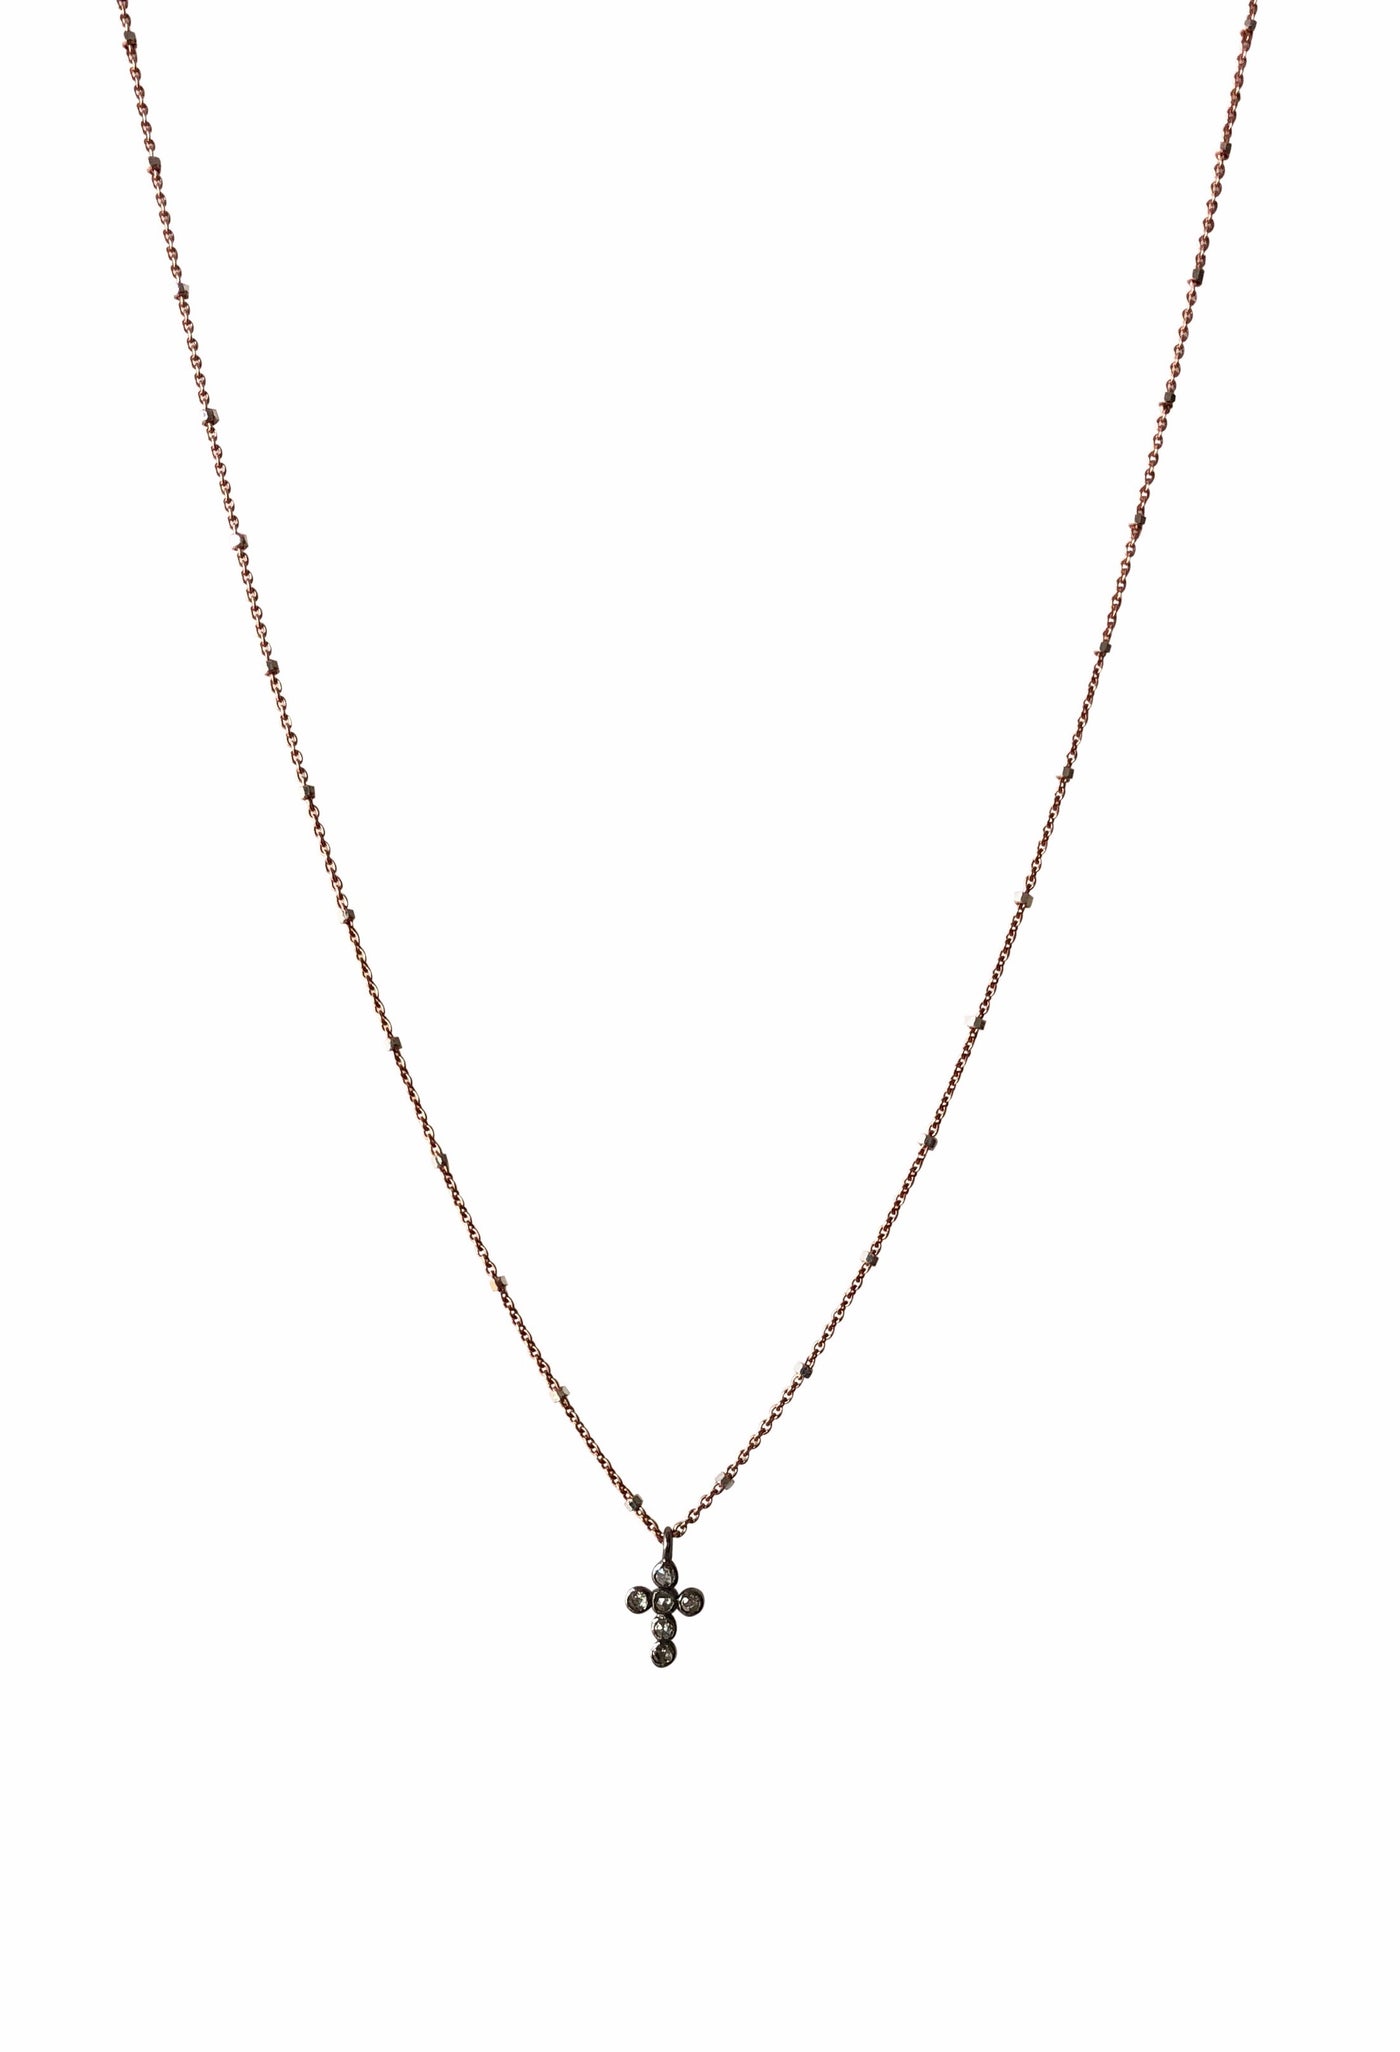 Pave Diamond Cross Charm Necklace